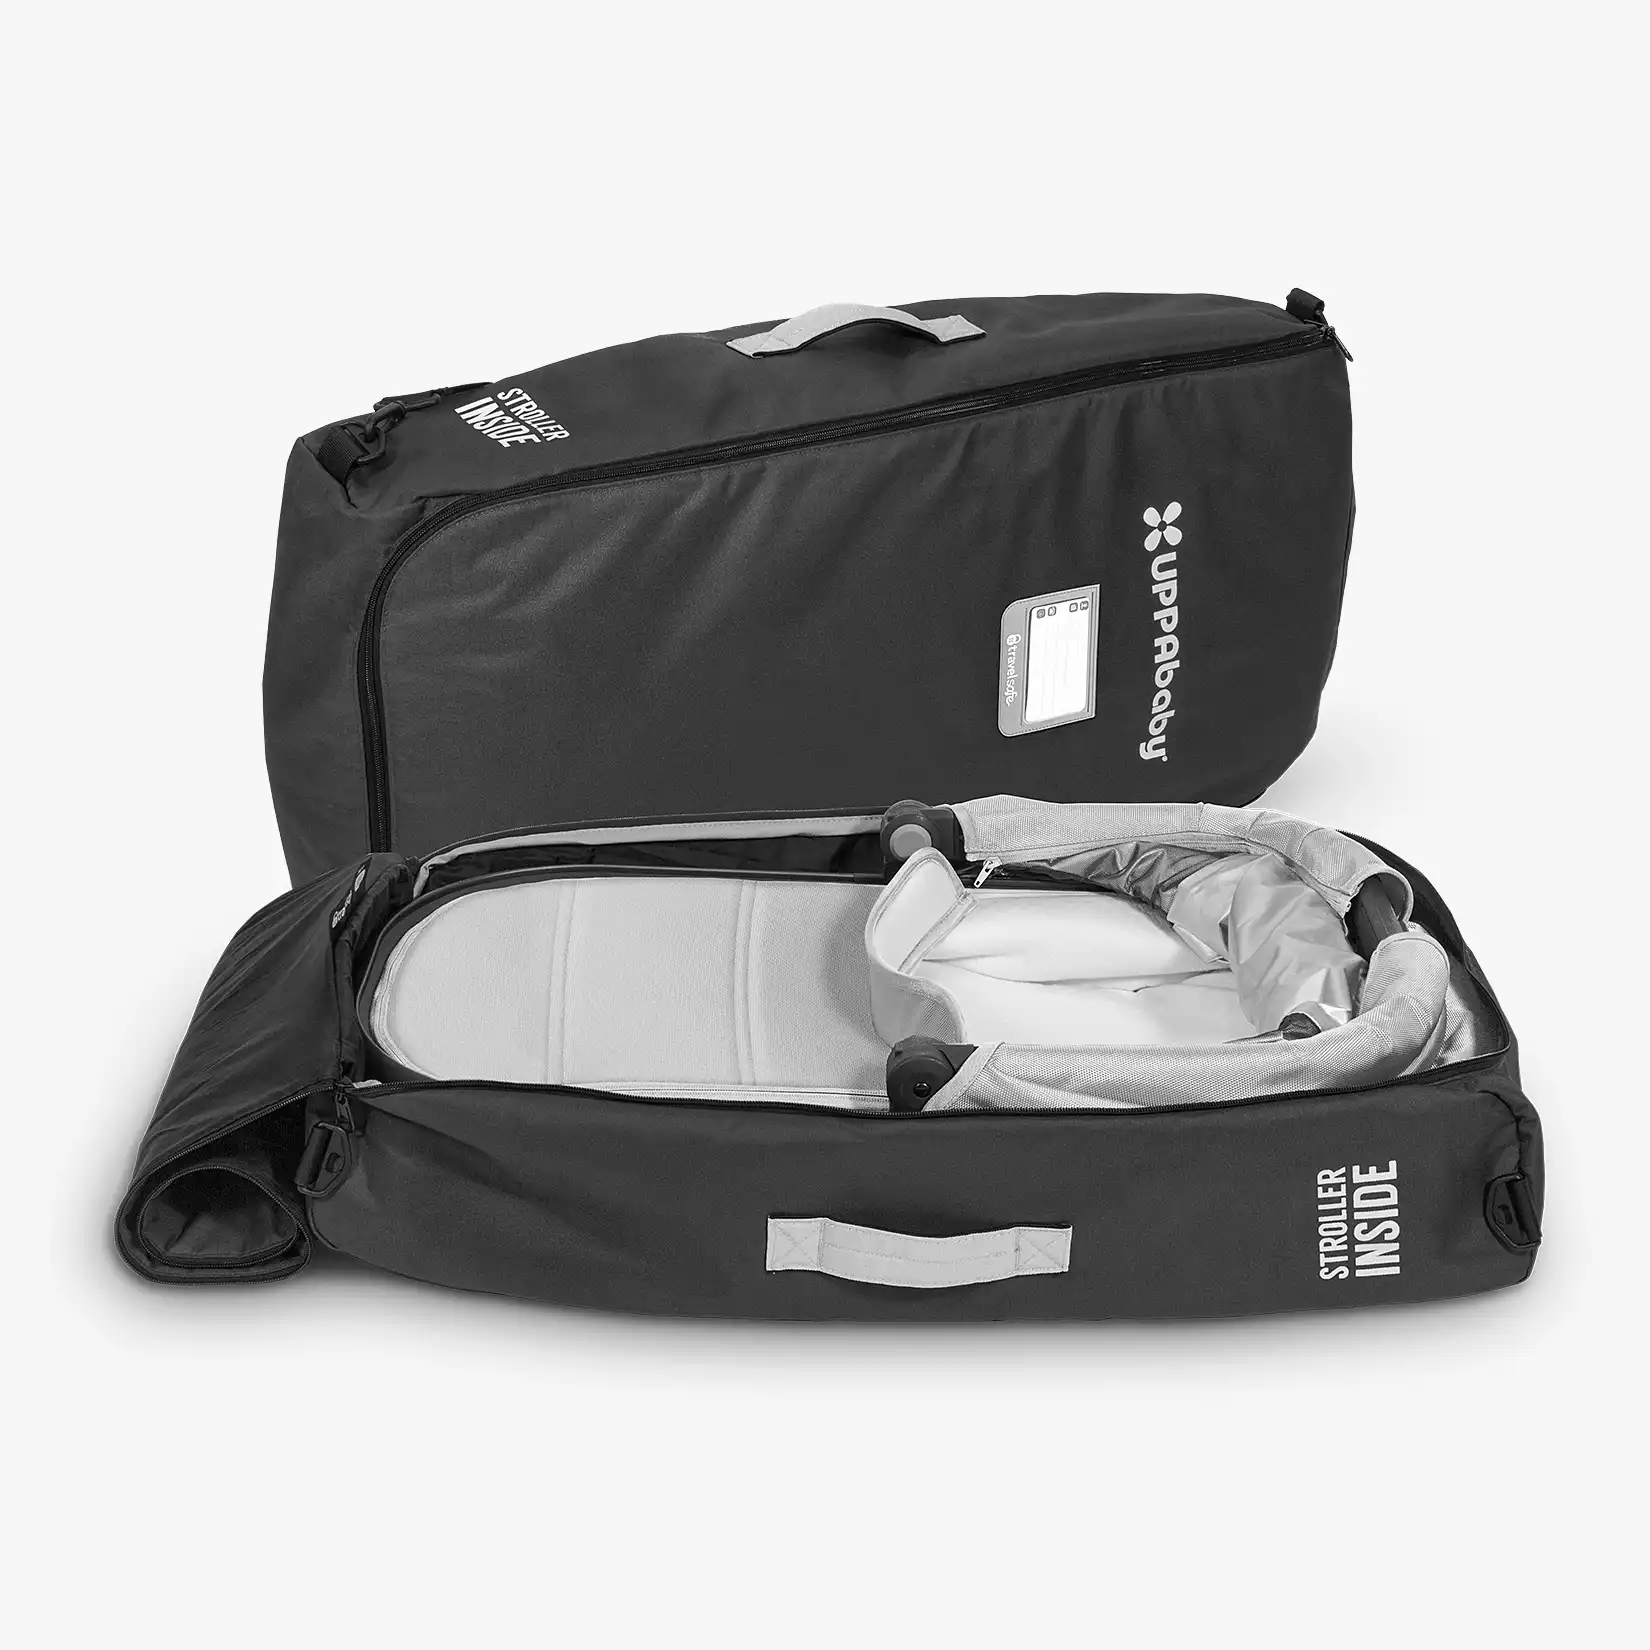 RumbleSeat / Carrycot Travel Bag